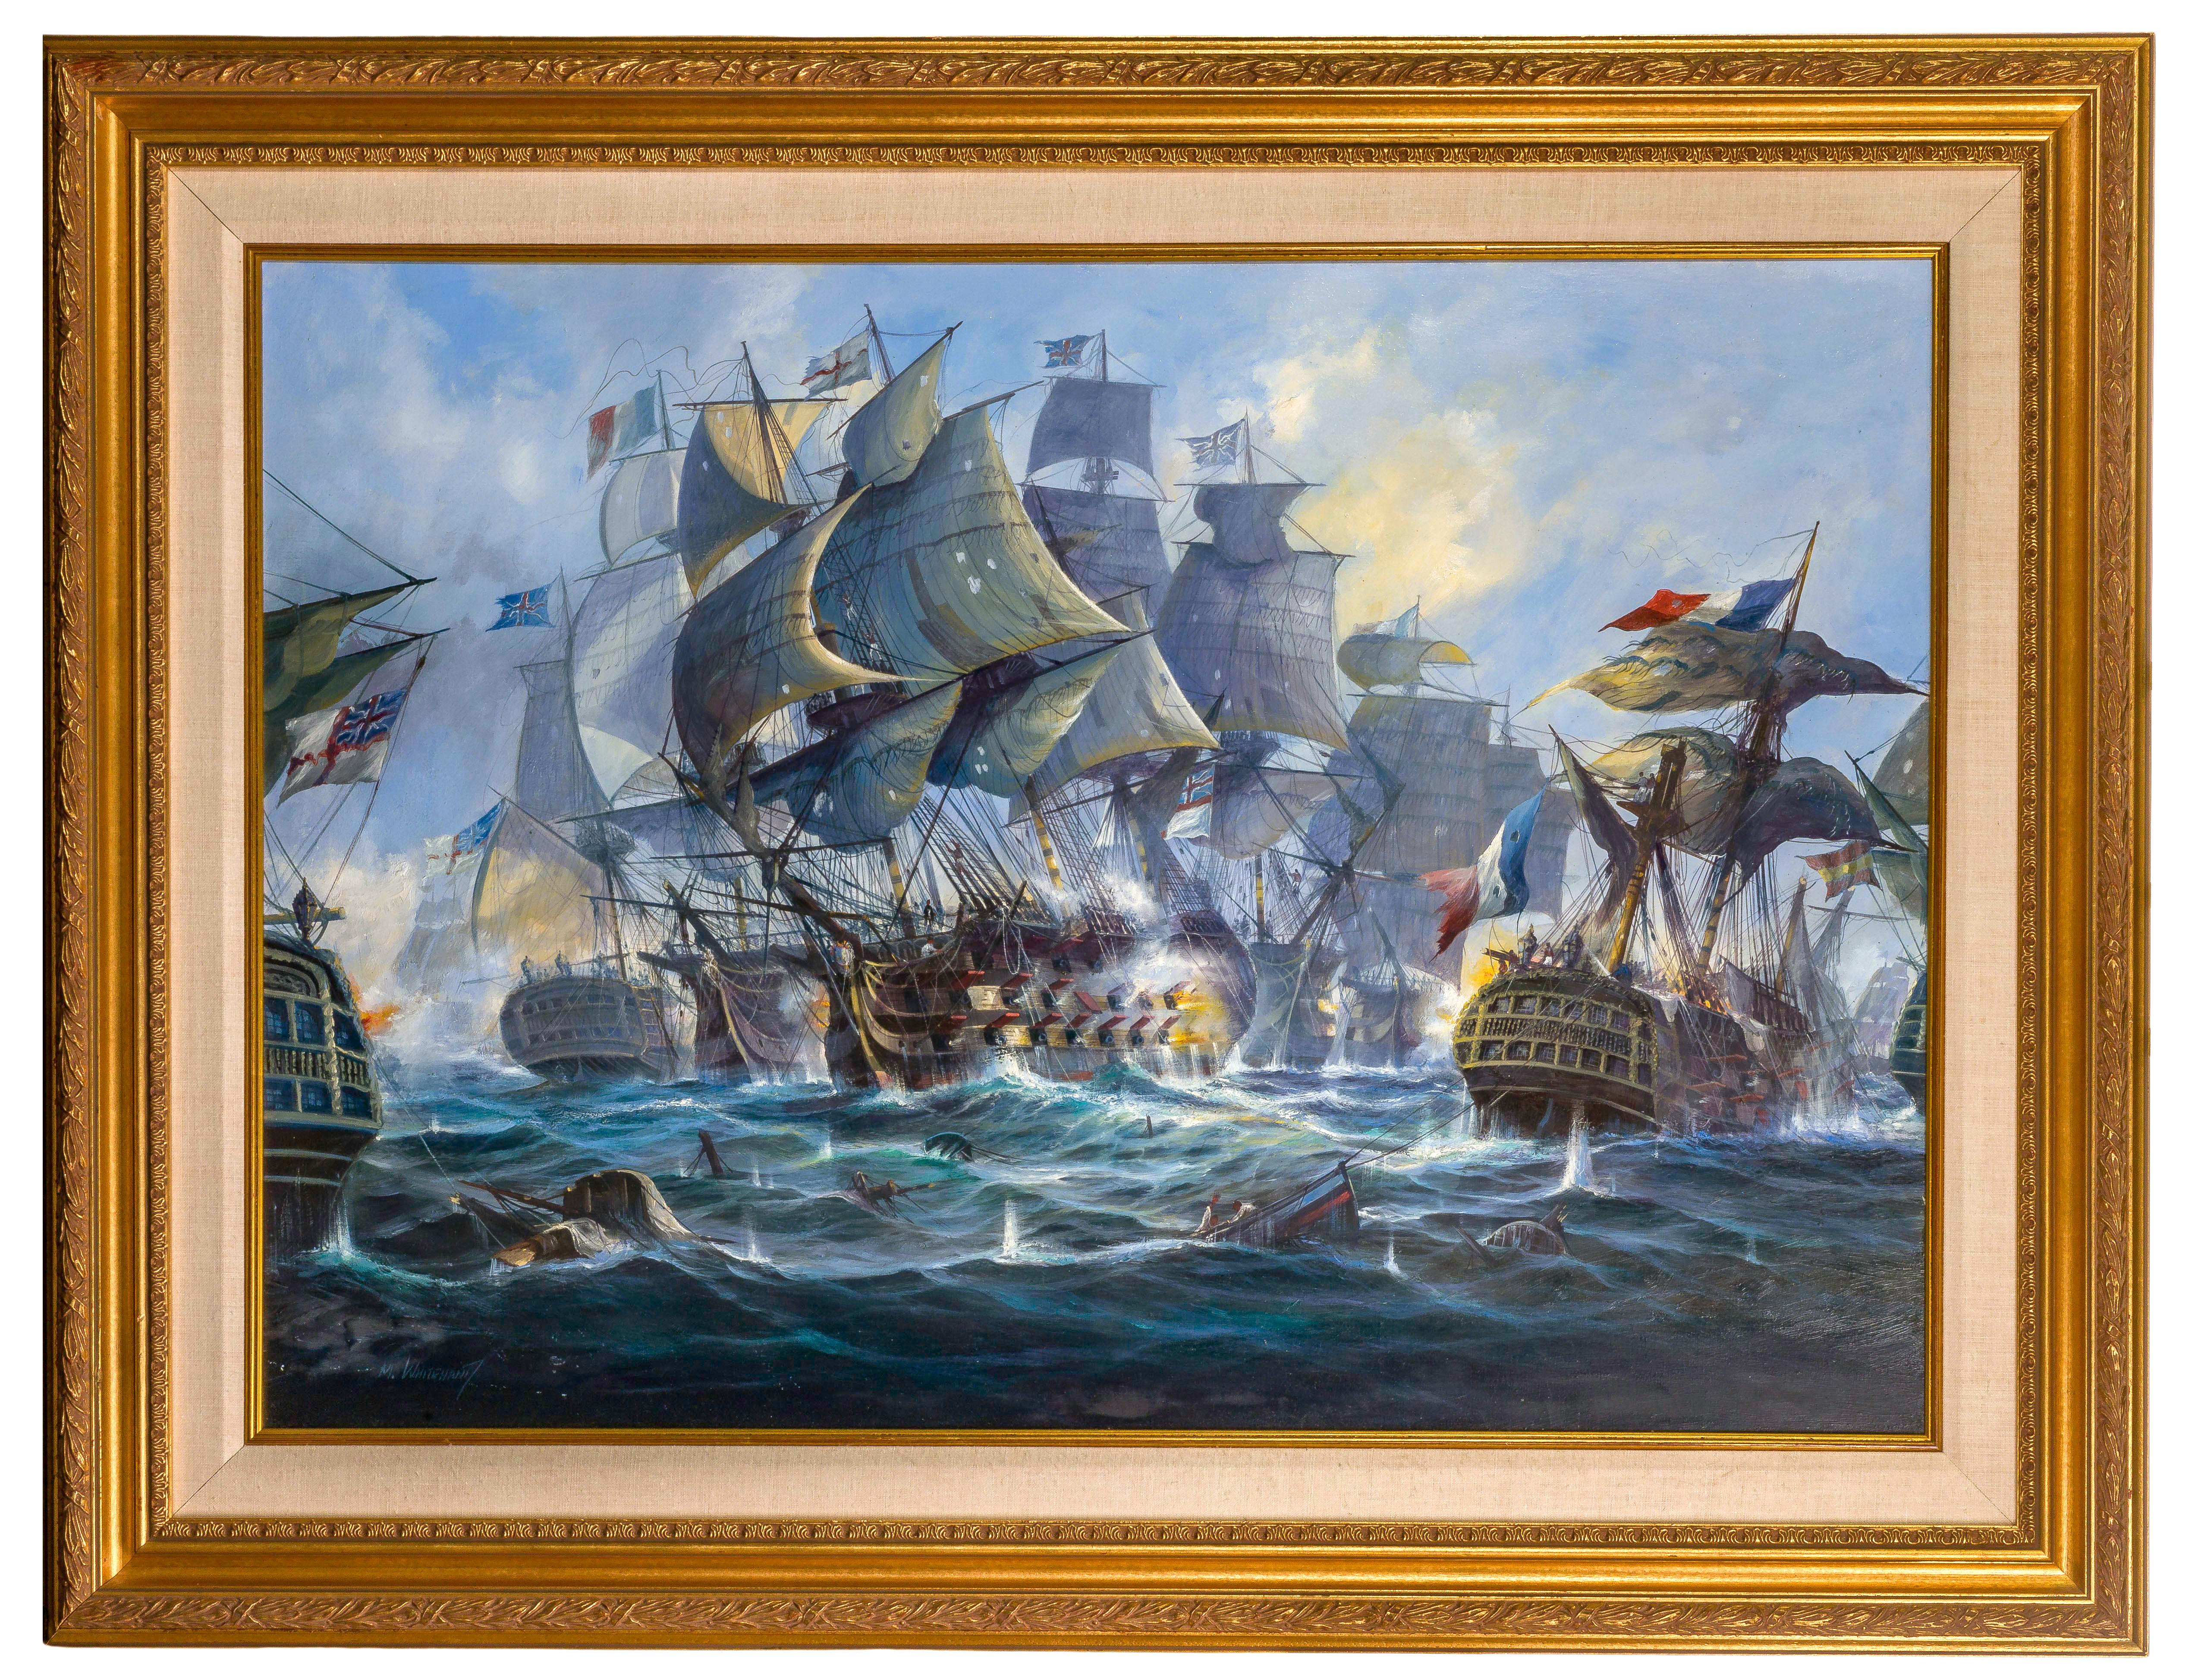 Michael Whitehand Landscape Painting - The Battle of Trafalgar